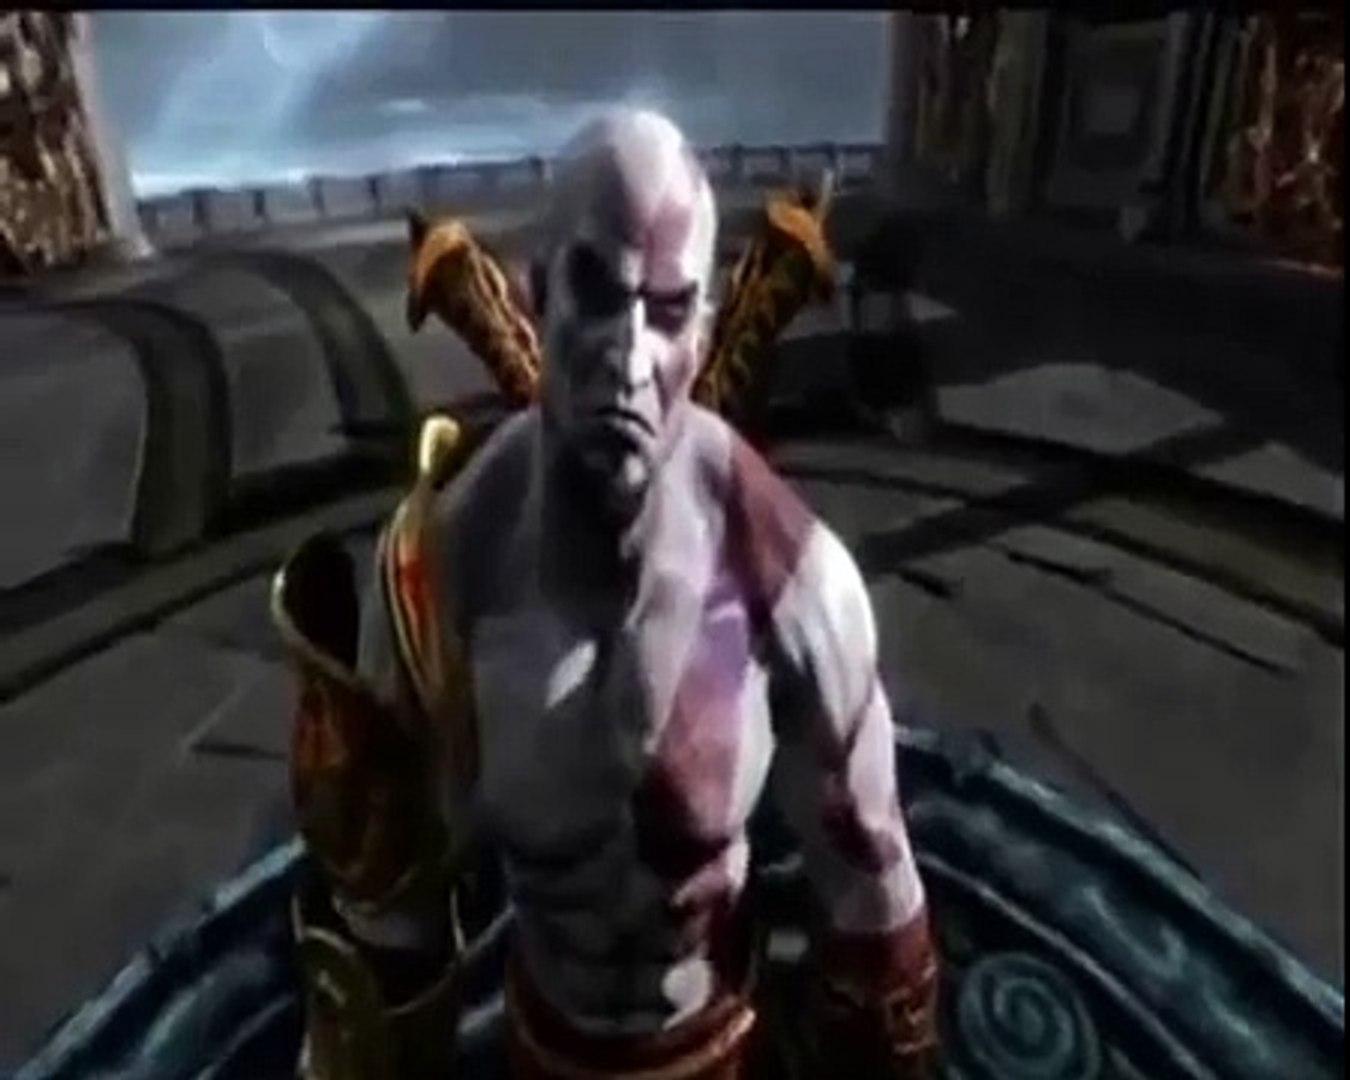 Kratos Vs Hercules